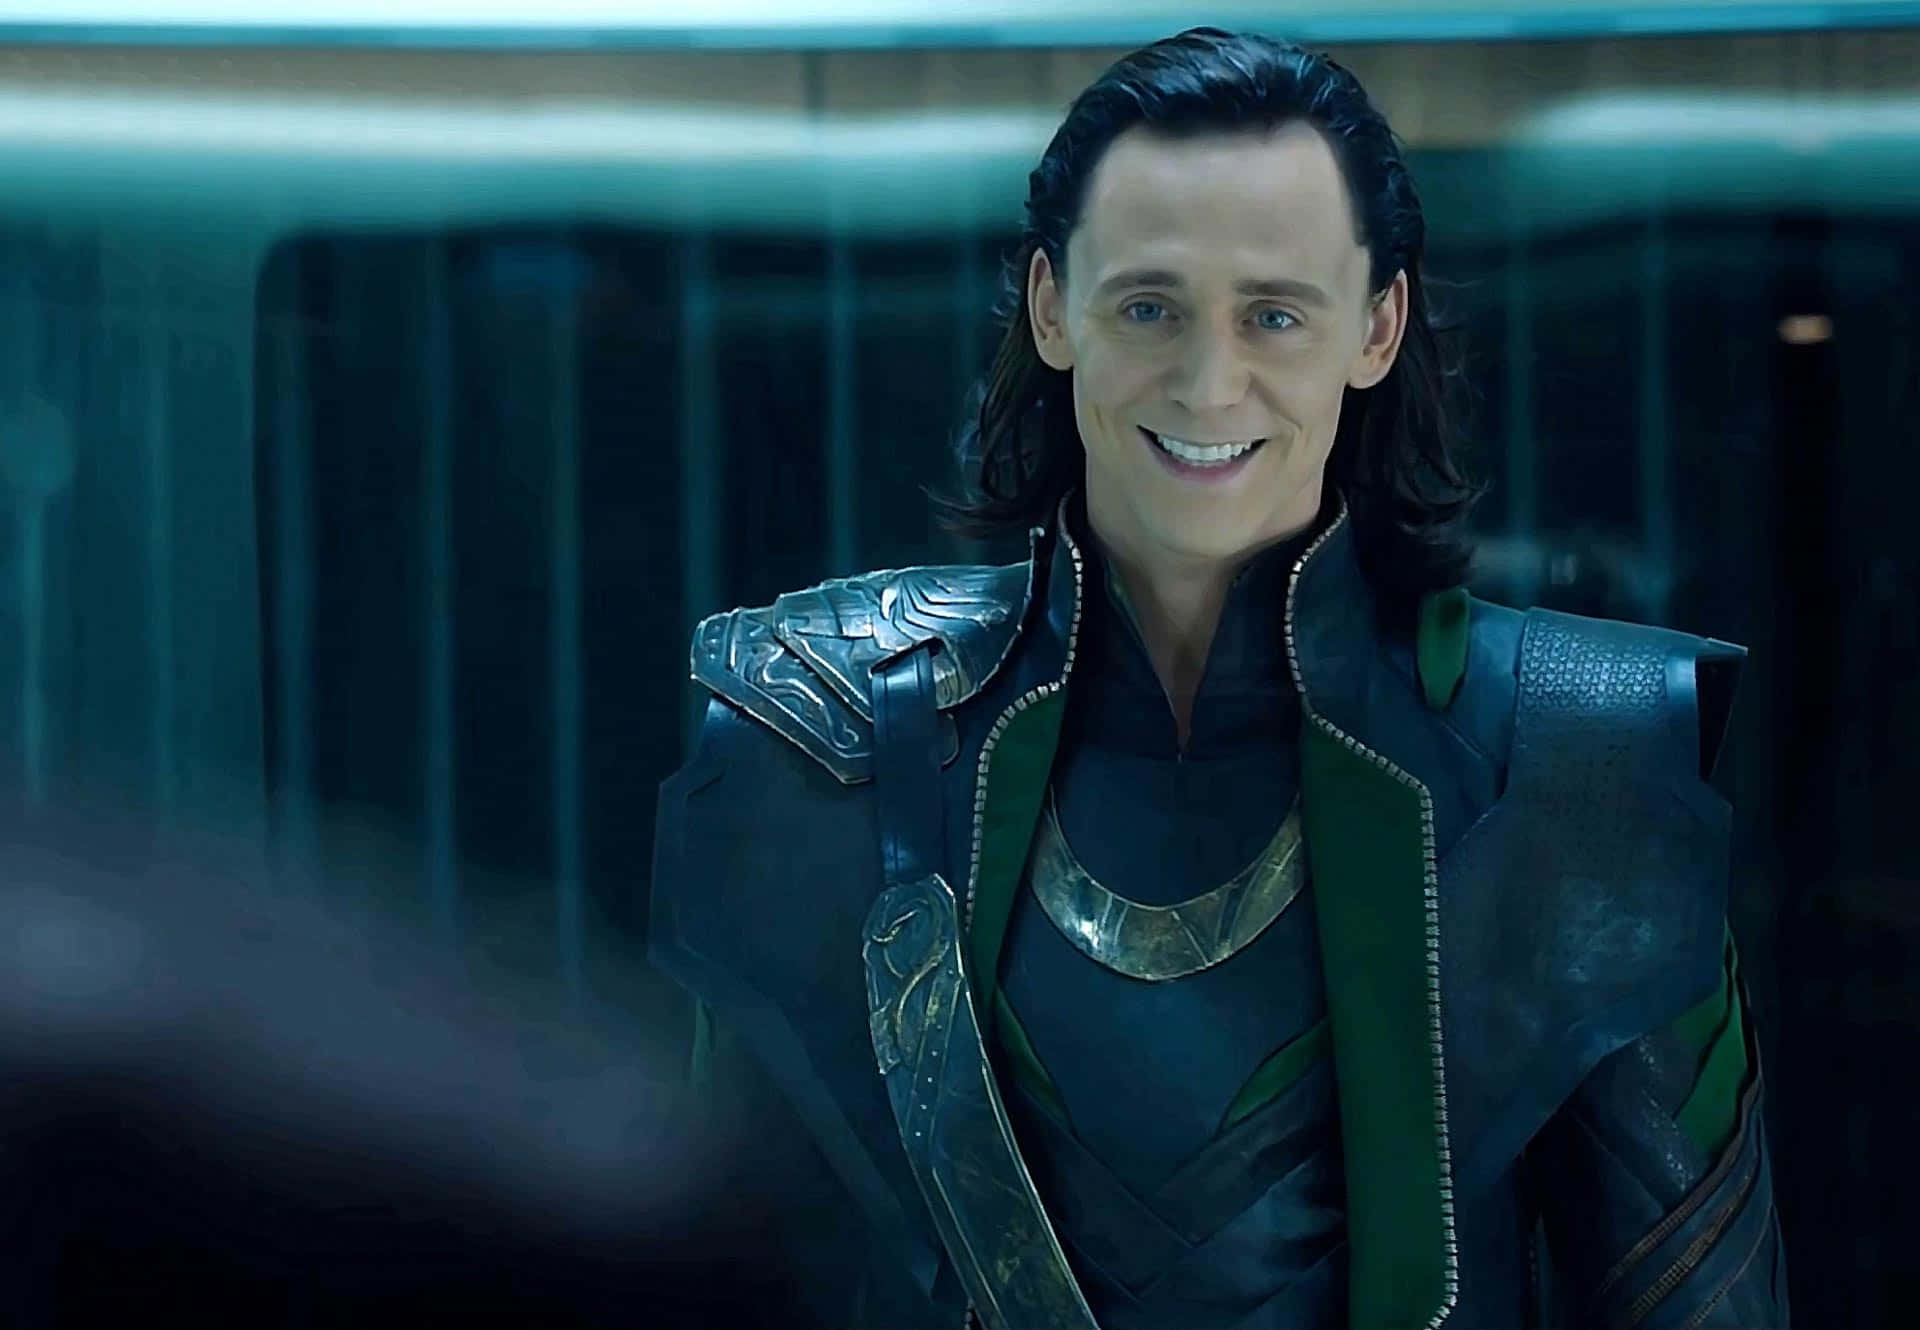 The God of Mischief, Loki, sitting on his throne